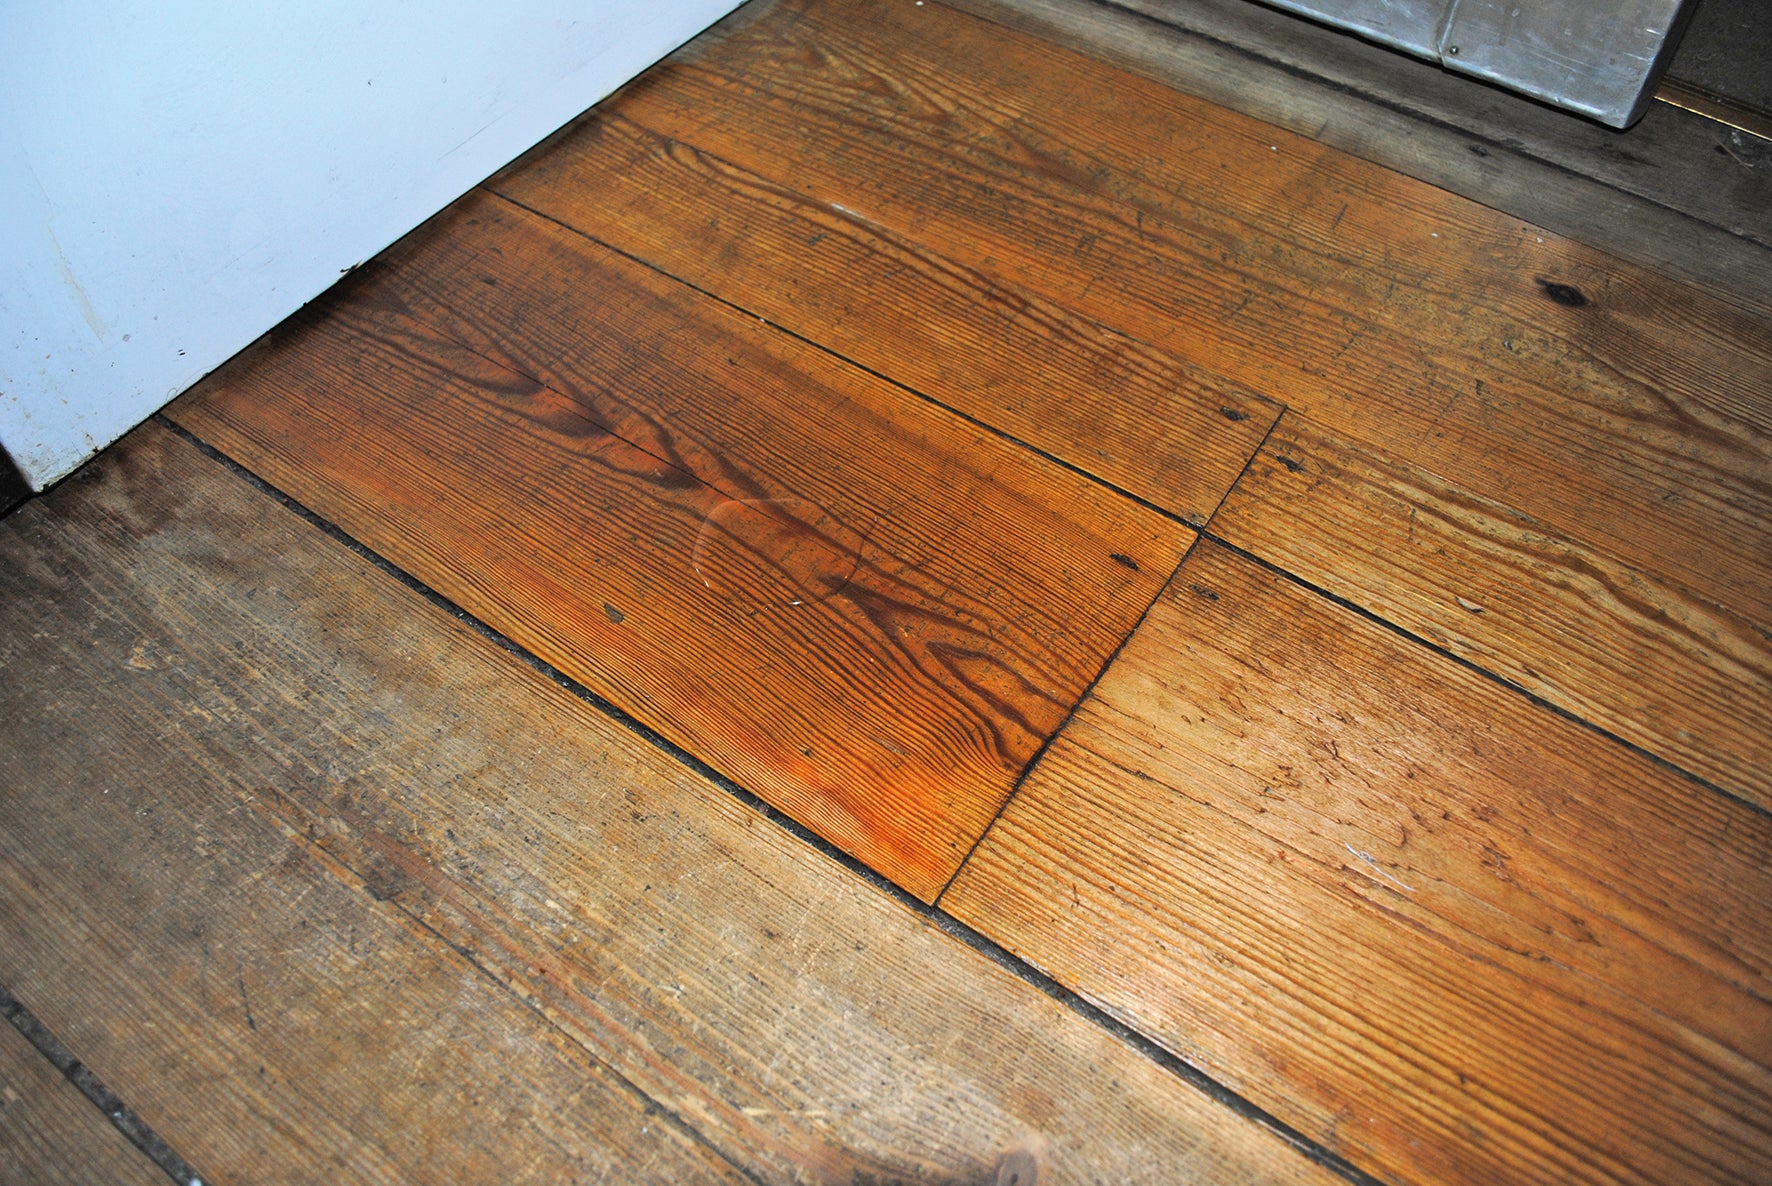 Allback Linseed Oil Wax to rejuvenate wooden floors.